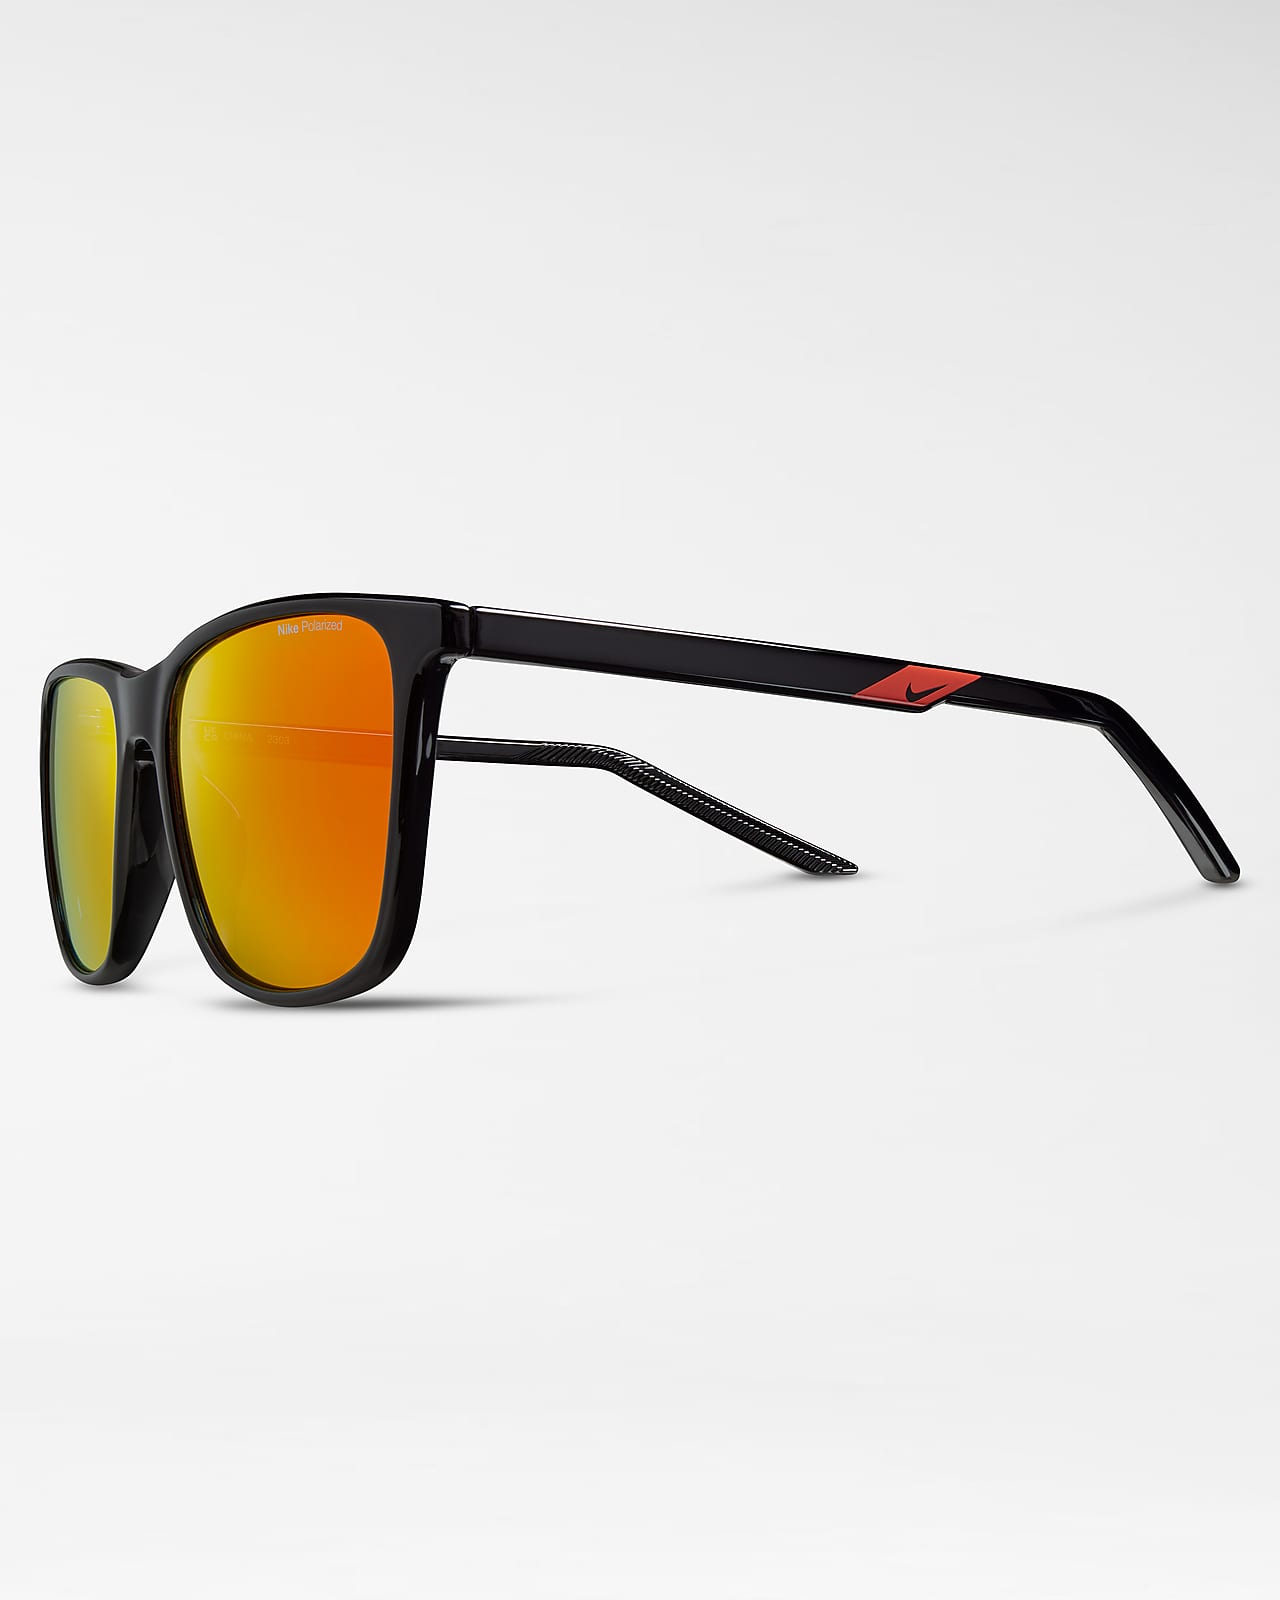 Nike State Polarized Sunglasses.